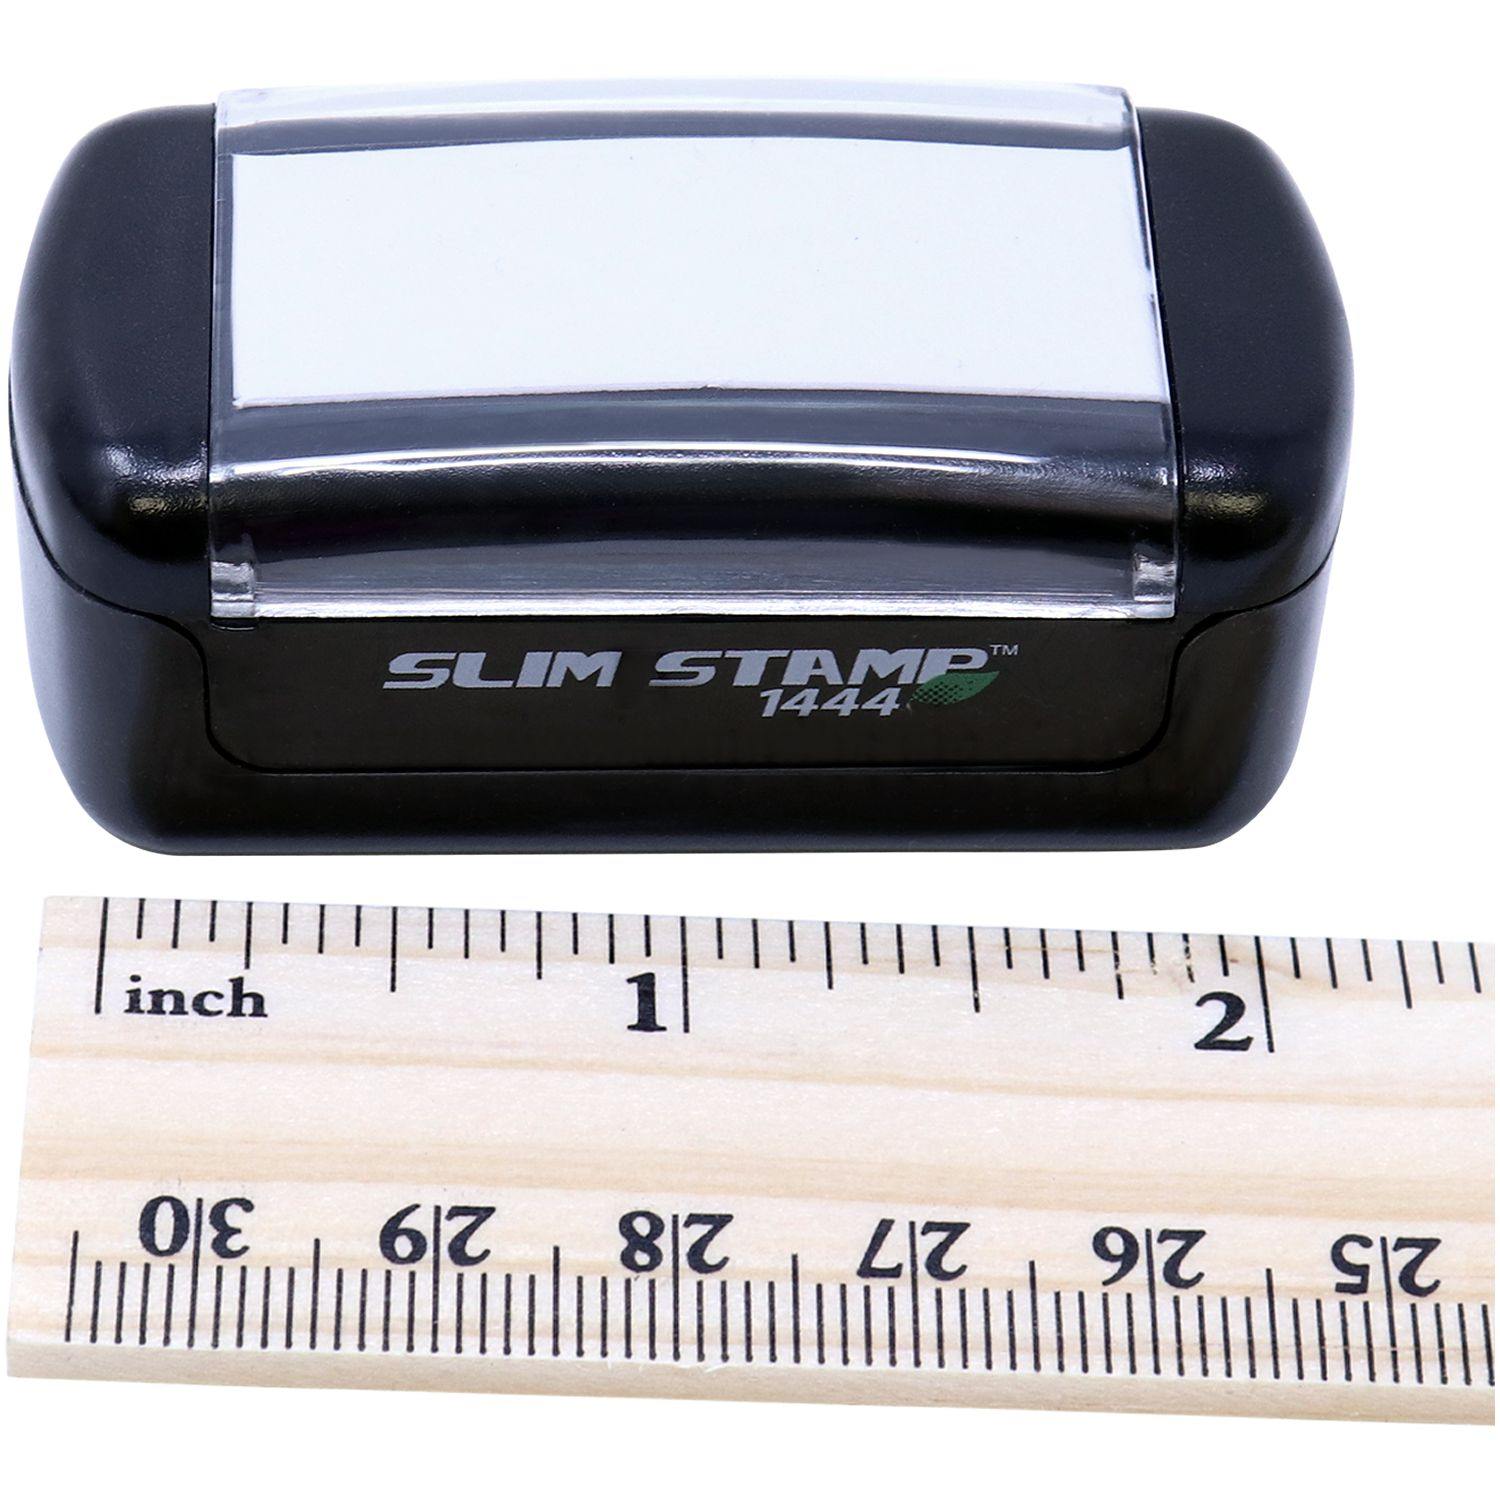 Measurement Slim Pre Inked Validated Stamp with Ruler